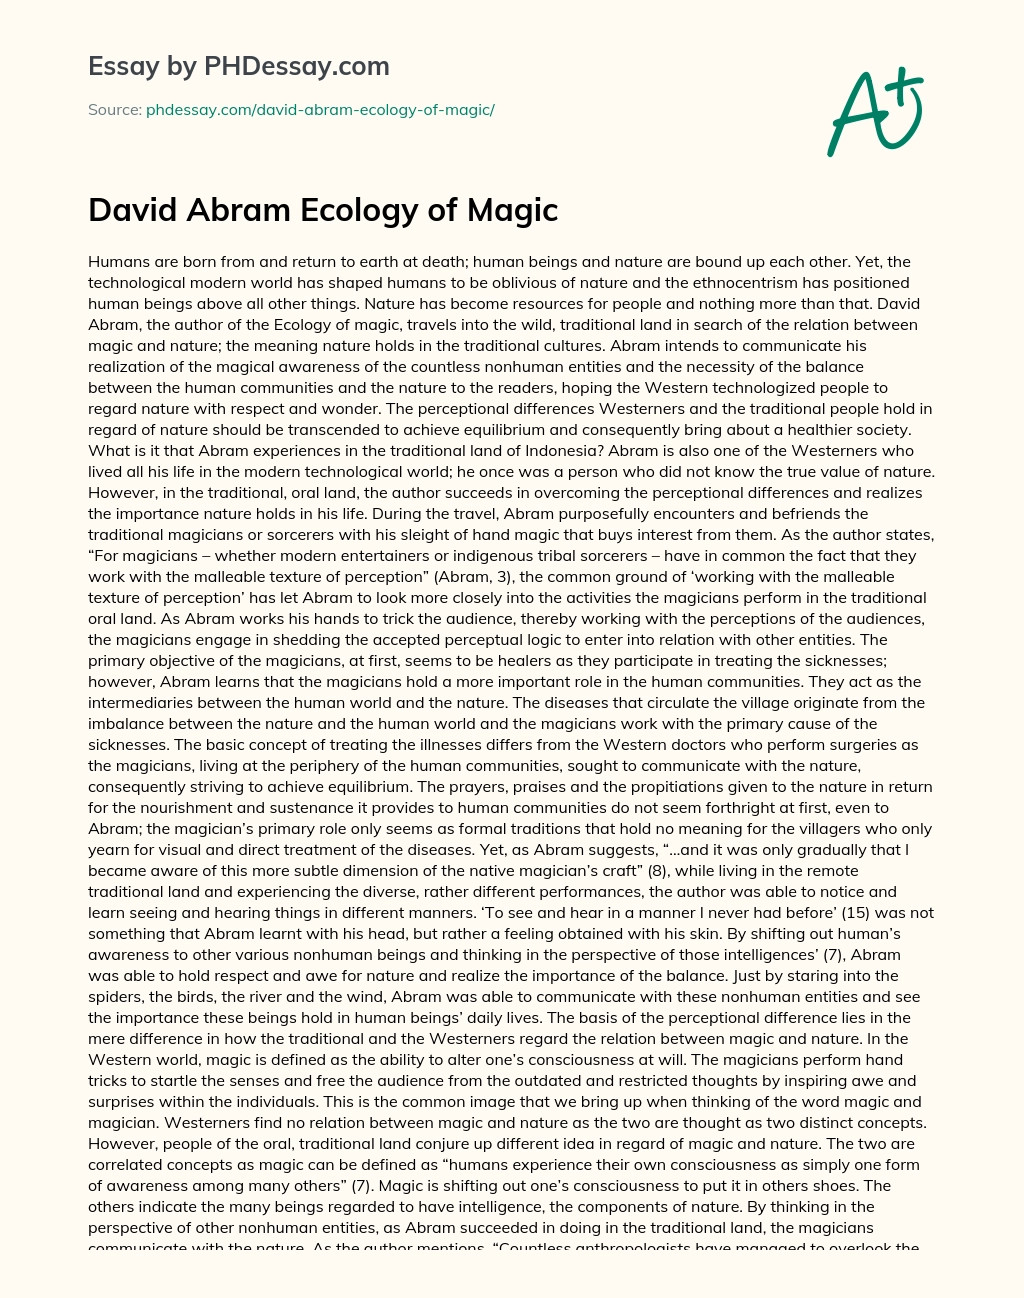 David Abram Ecology of Magic essay